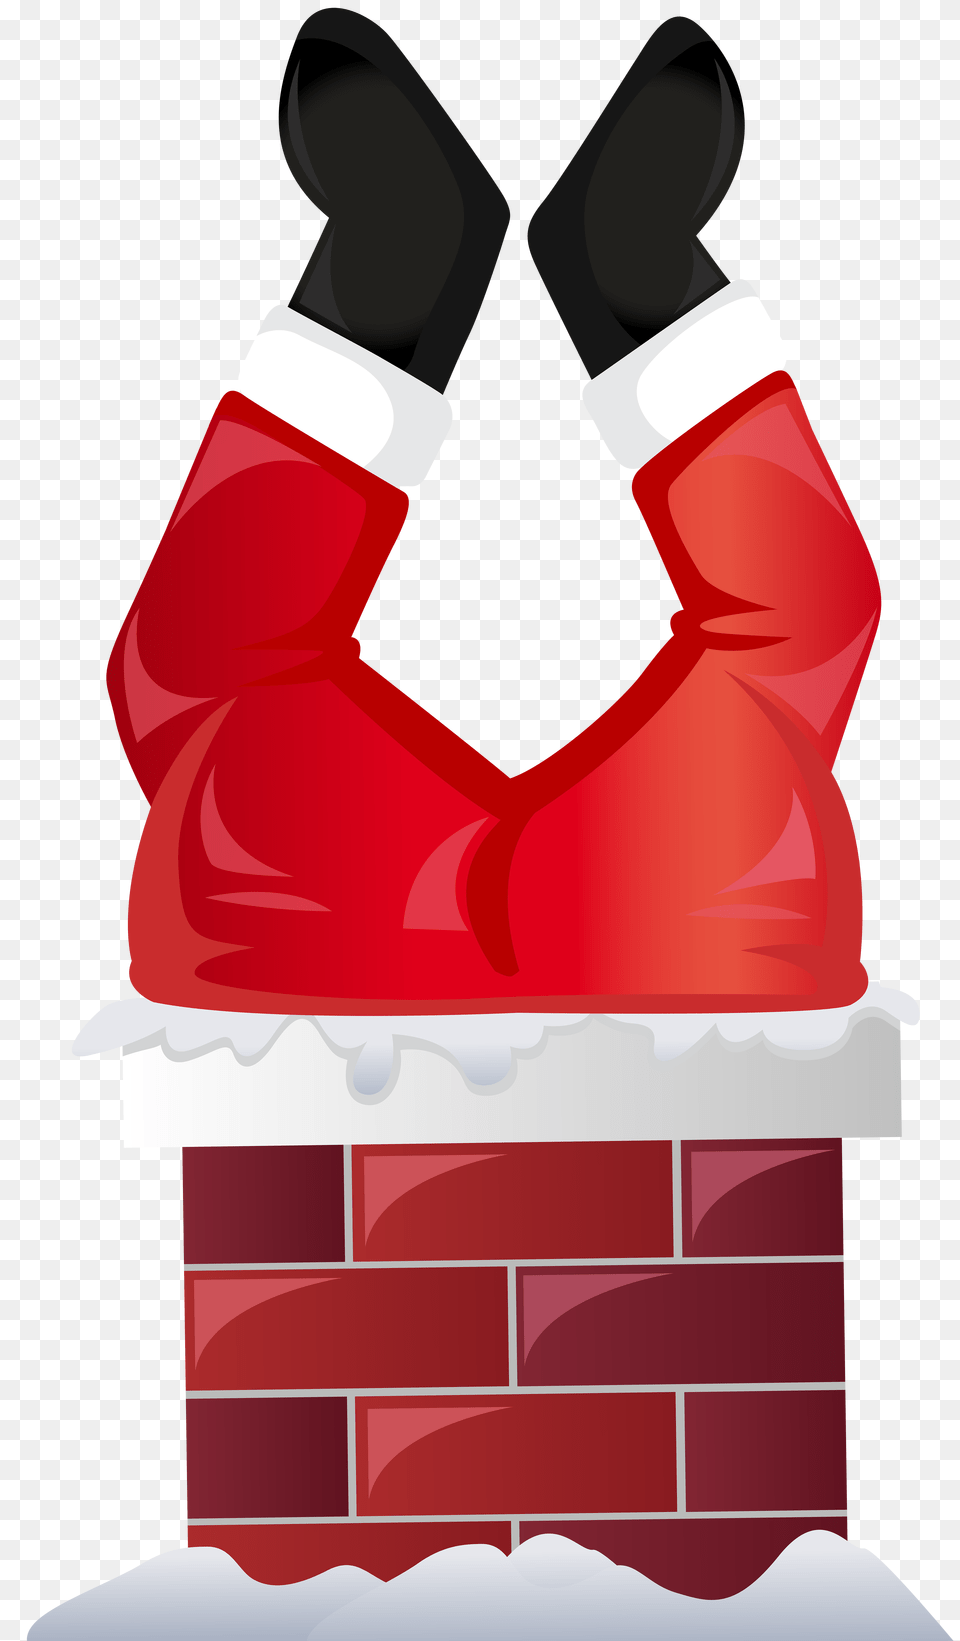 Funny Santa In Chimney Transparent Clip Gallery, Brick, Plant, Leaf, Ketchup Png Image